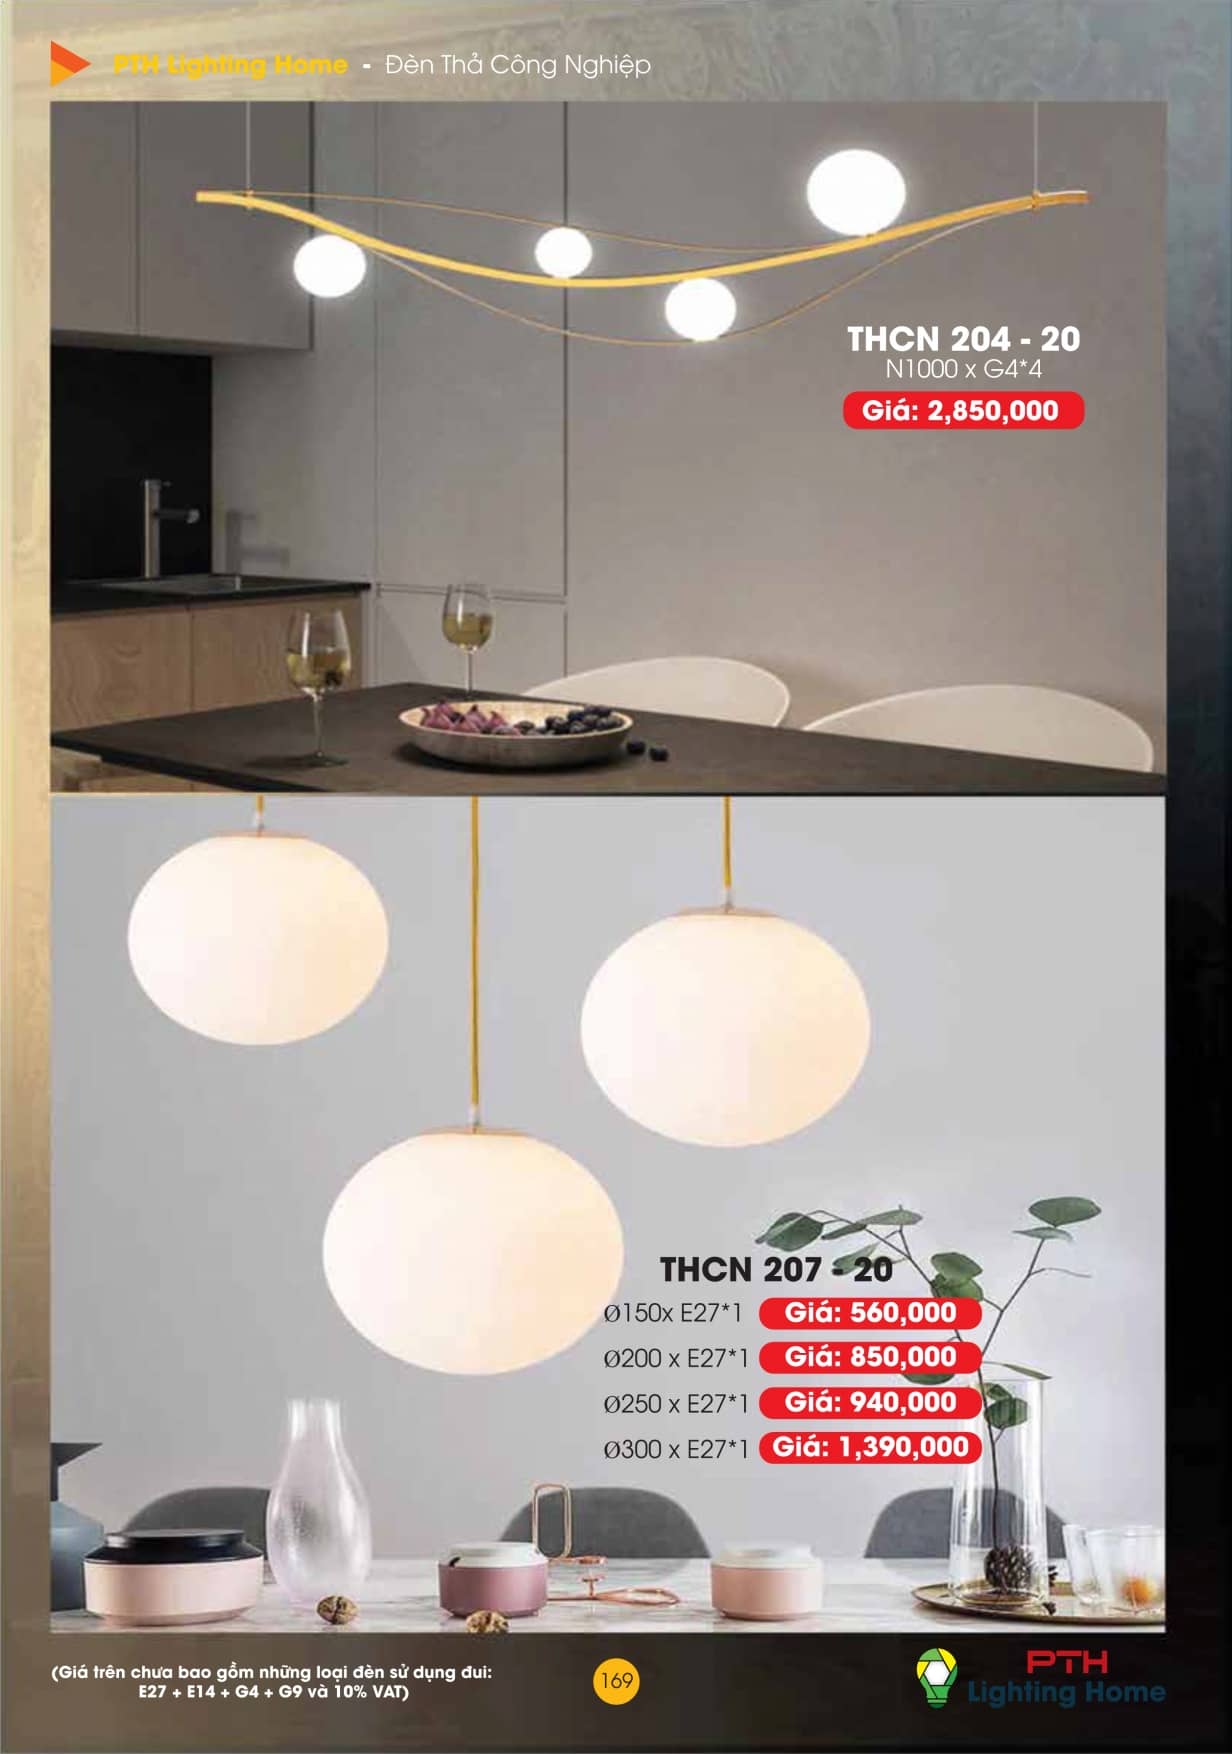 catalogue-bang-gia-den-led-trang-tri-pth-lighting-home-171